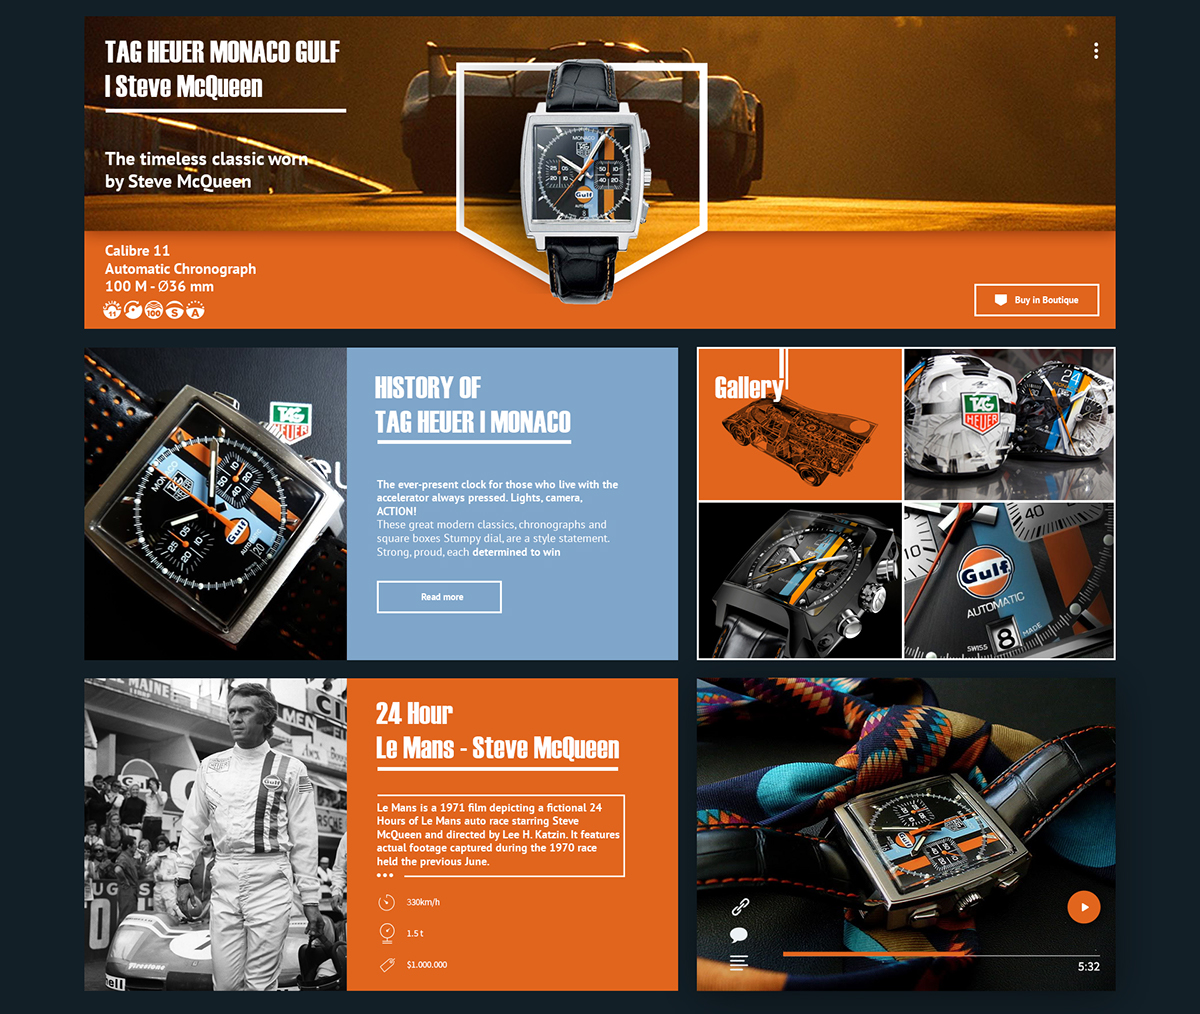 mobile app Icon tag heuer steve McQuenn story Porsche prototype Web Mockup